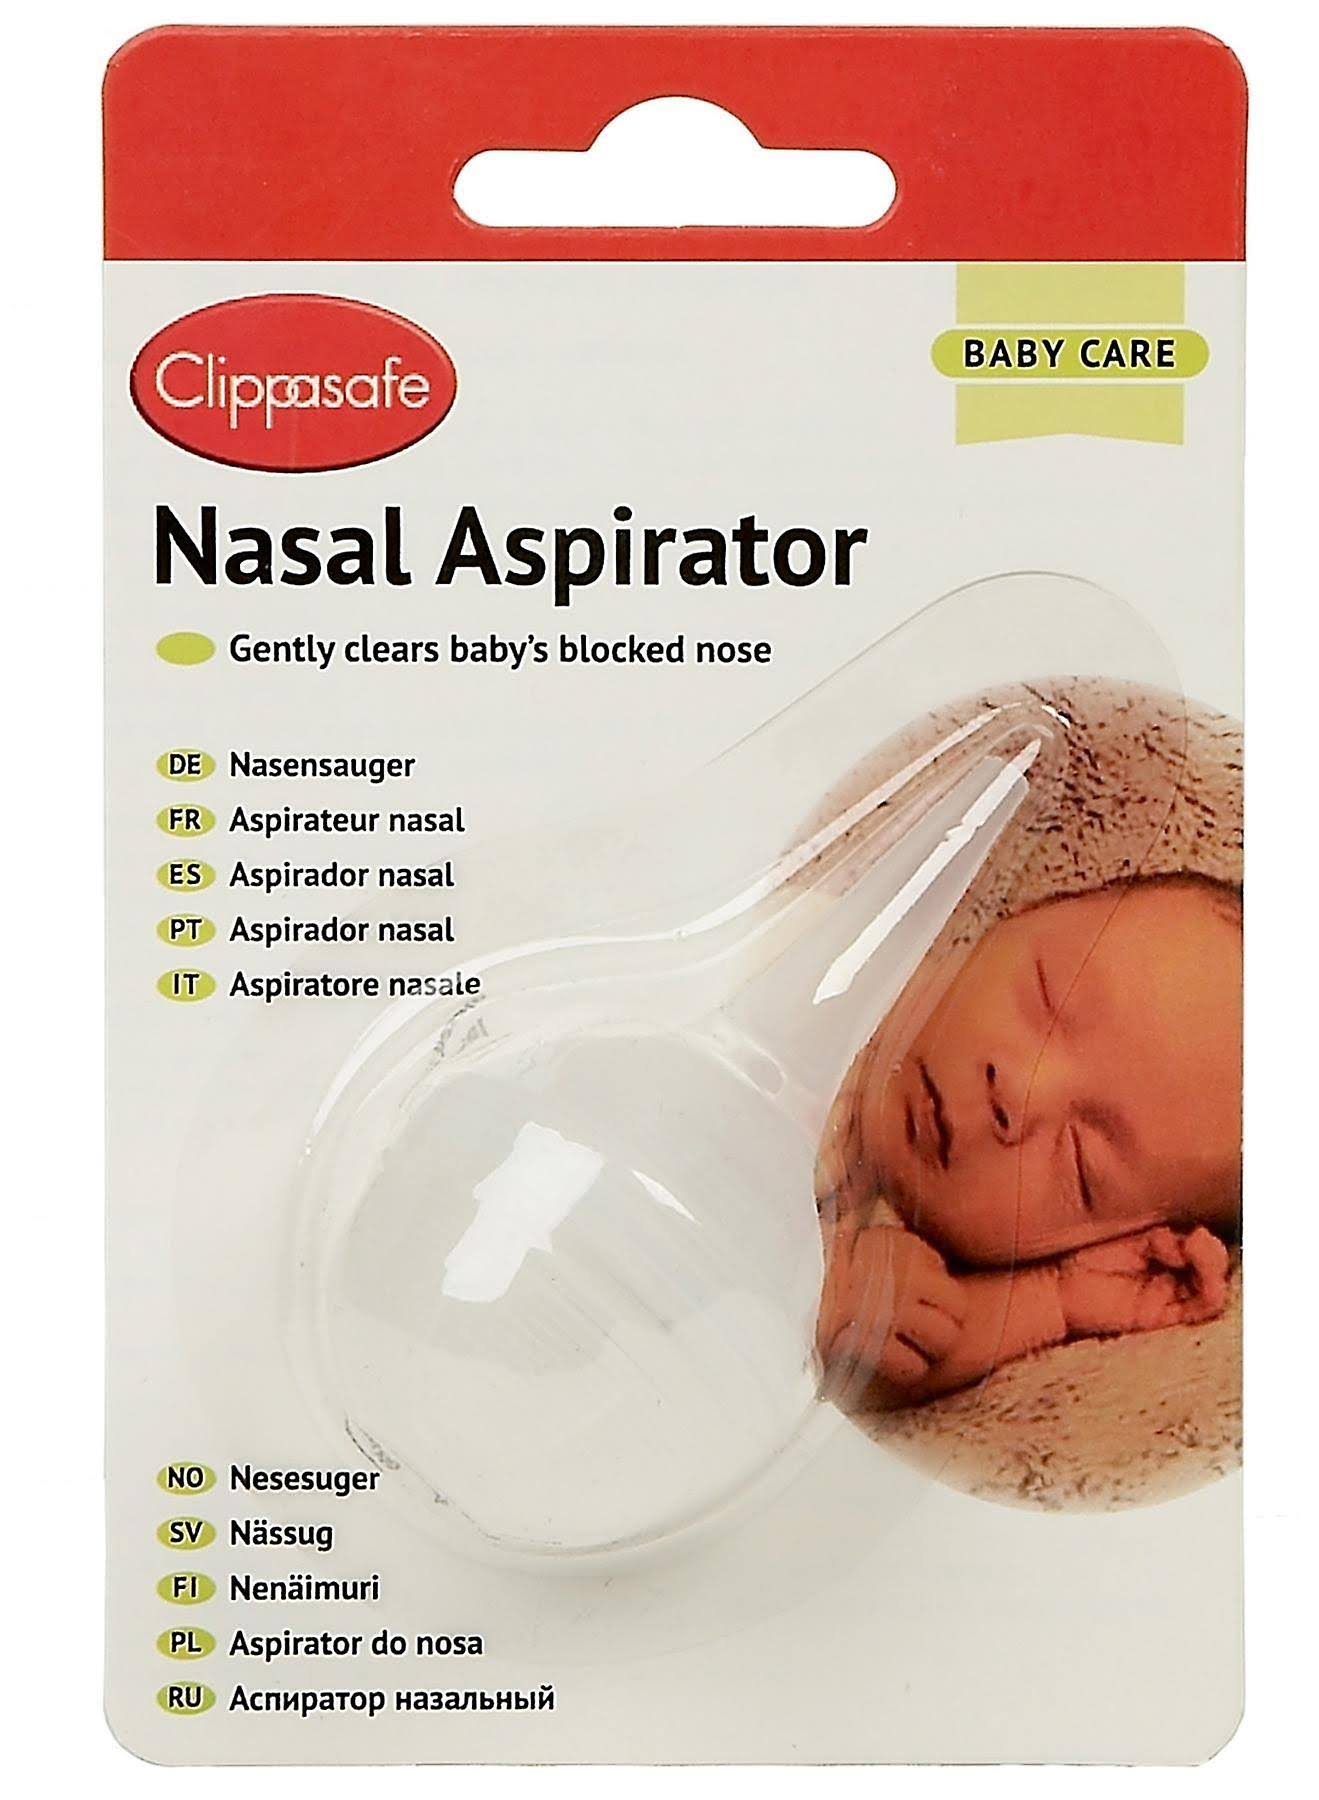 Clippasafe Nasal Aspirator